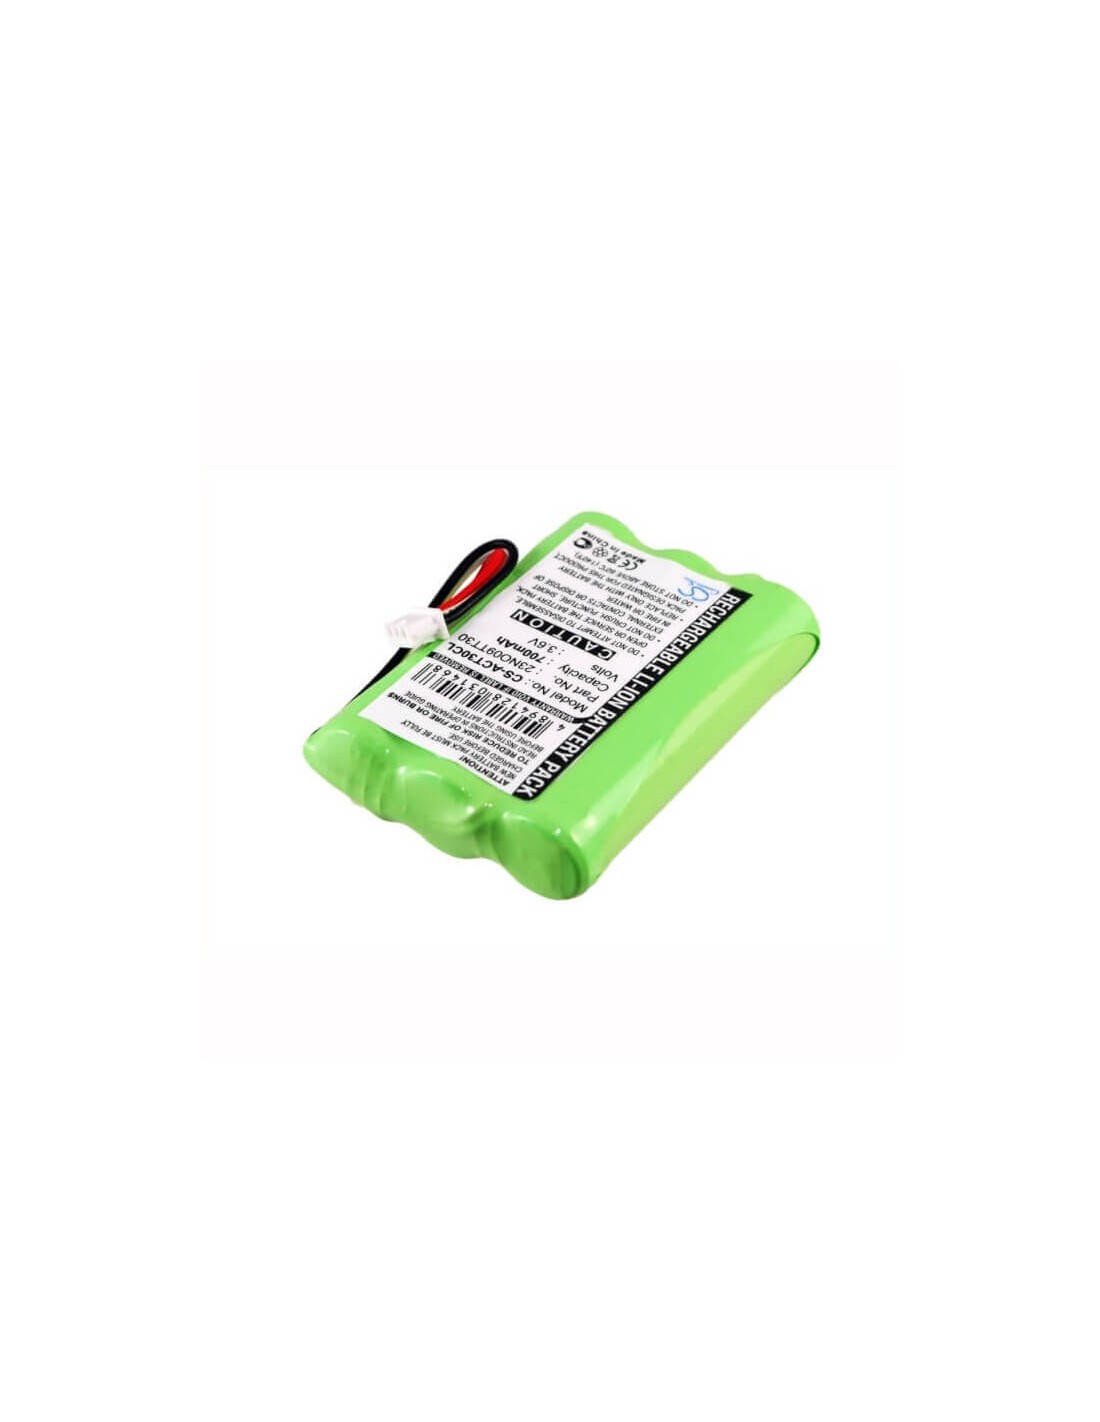 Battery for Polycom, Kirk3040, Kirk4020, Kirk4040, Kirk5020, 3.6V, 700mAh - 2.52Wh